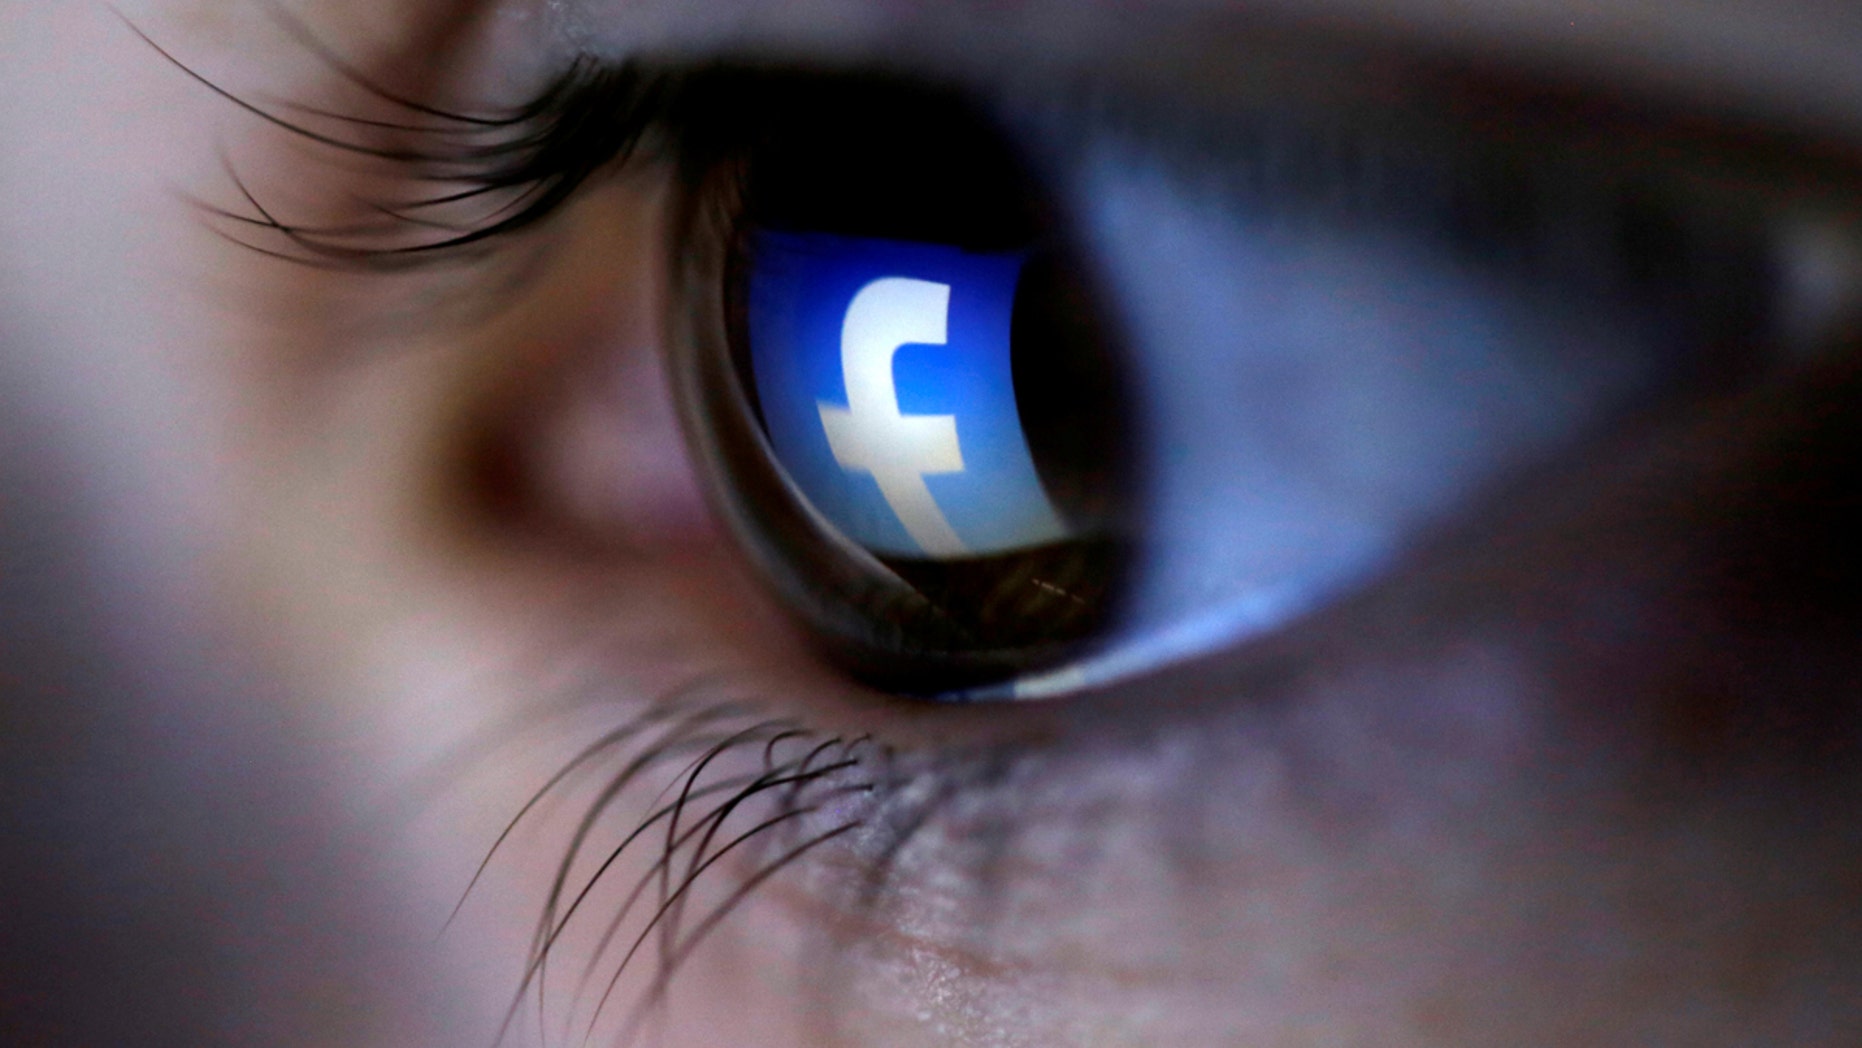 Facebook cracks down on revenge porn with new detection tech ...